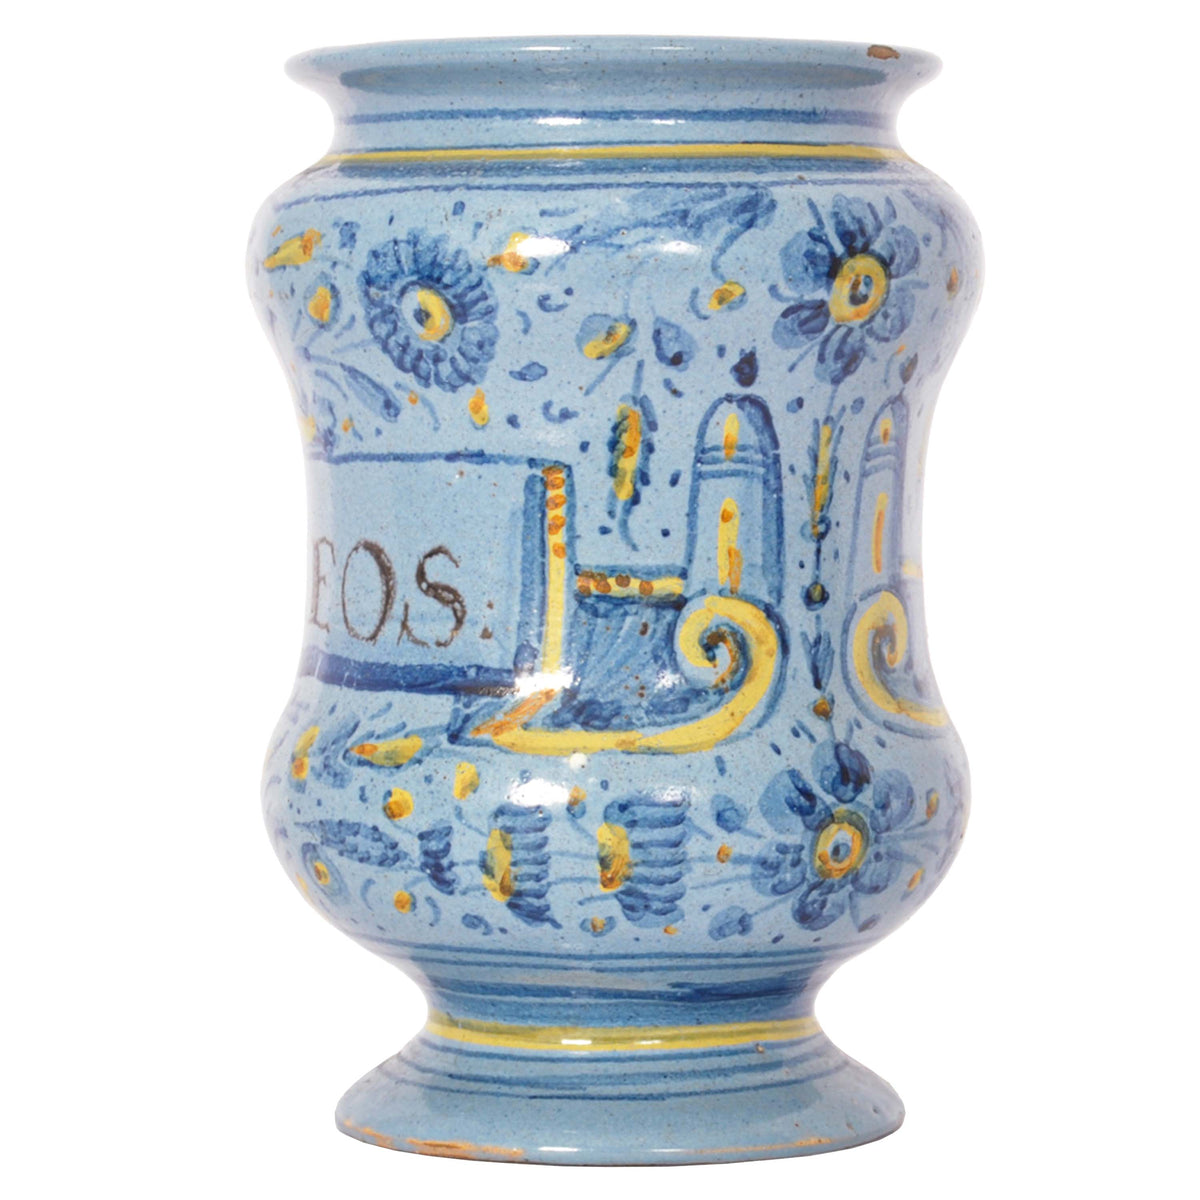 Pair Antique Italian Maiolica Pottery Albarelli Medicine Apothecary Jars, Circa 1650